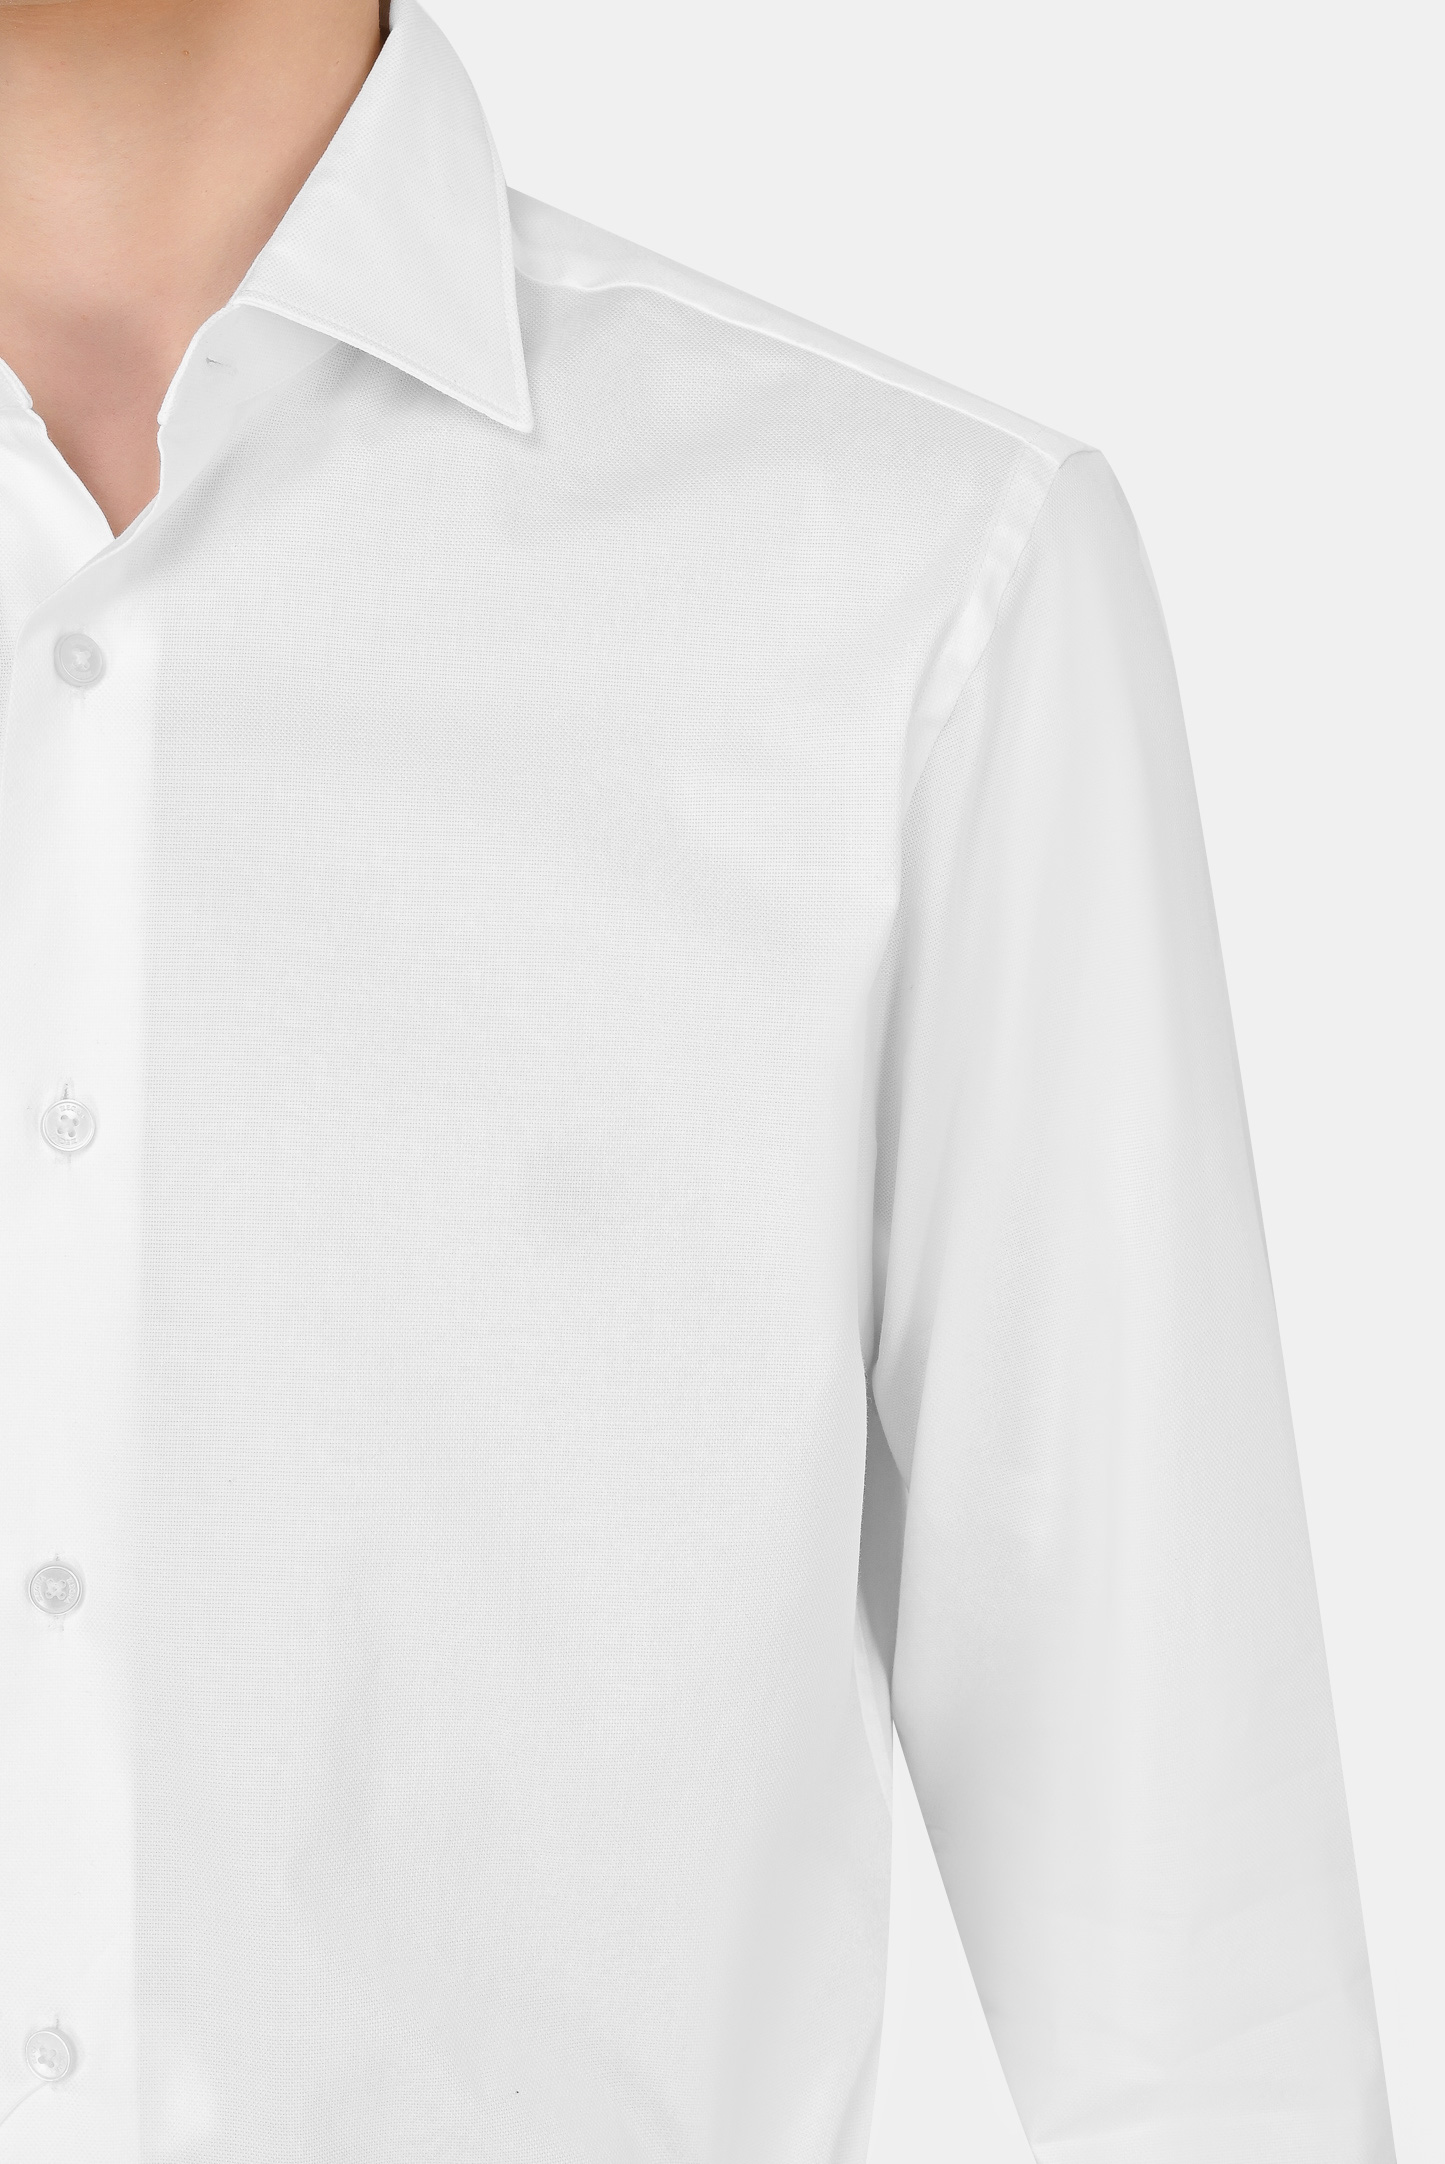 Рубашка Z ZEGNA 305120 ZCSC1, цвет: Белый, Мужской